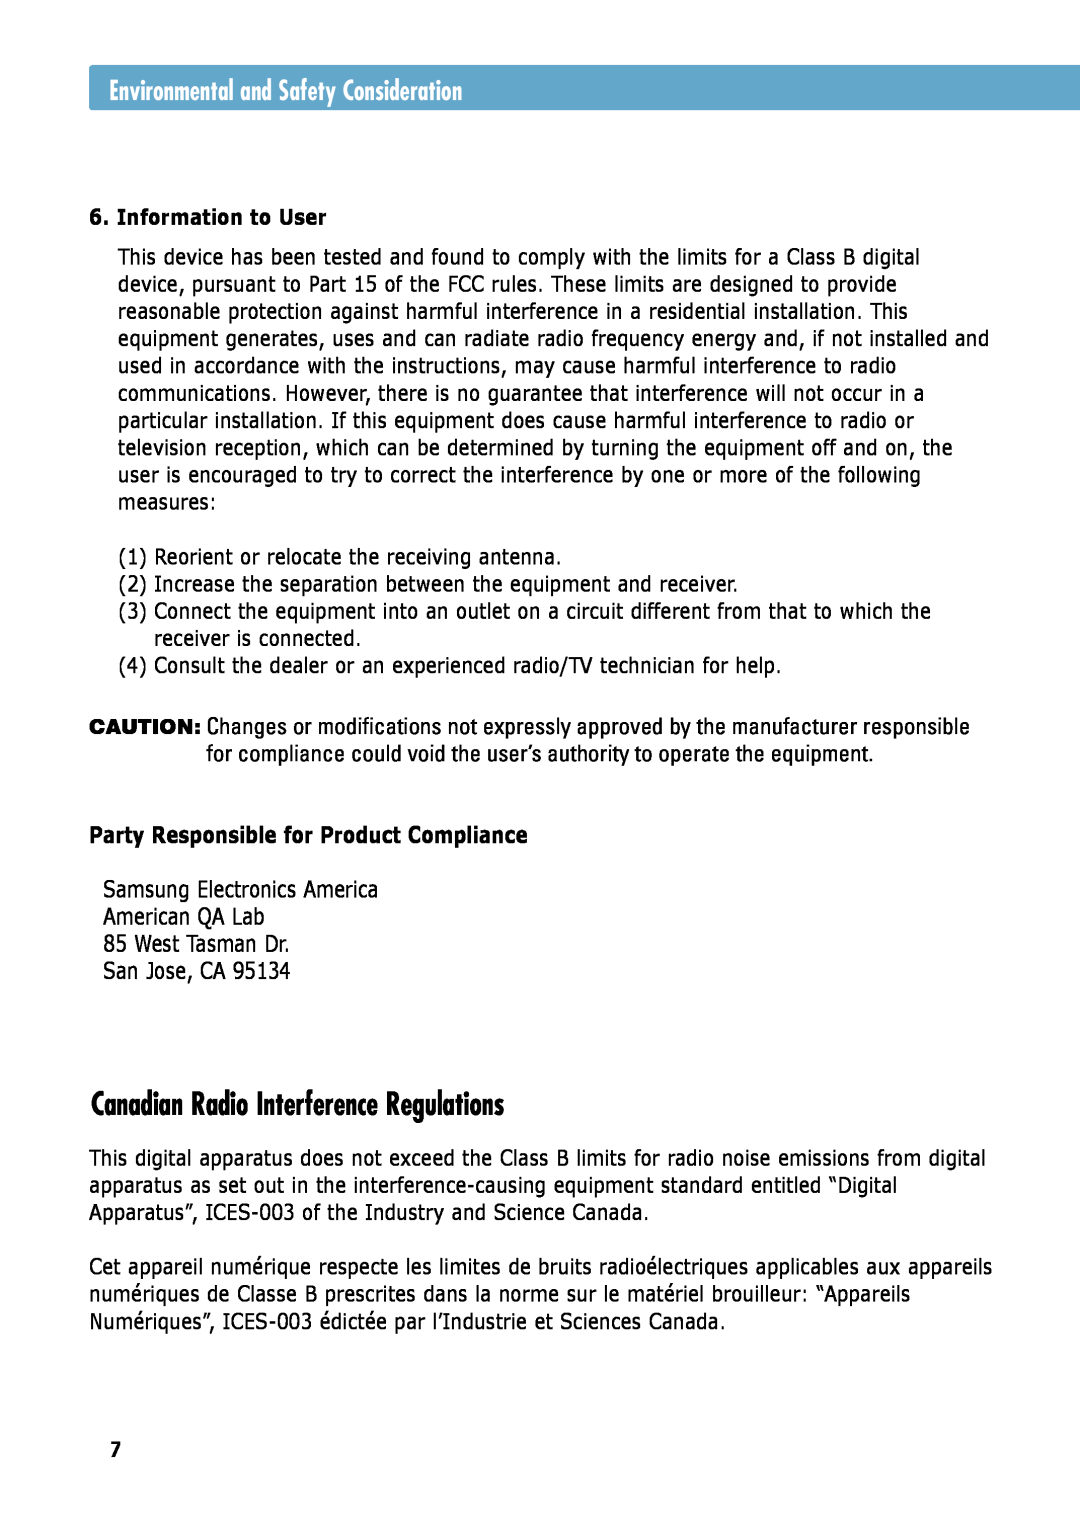 Samsung ML-6060S, ML-6060N Canadian Radio Interference Regulations, Environmental and Safety Consideration, San Jose, CA 